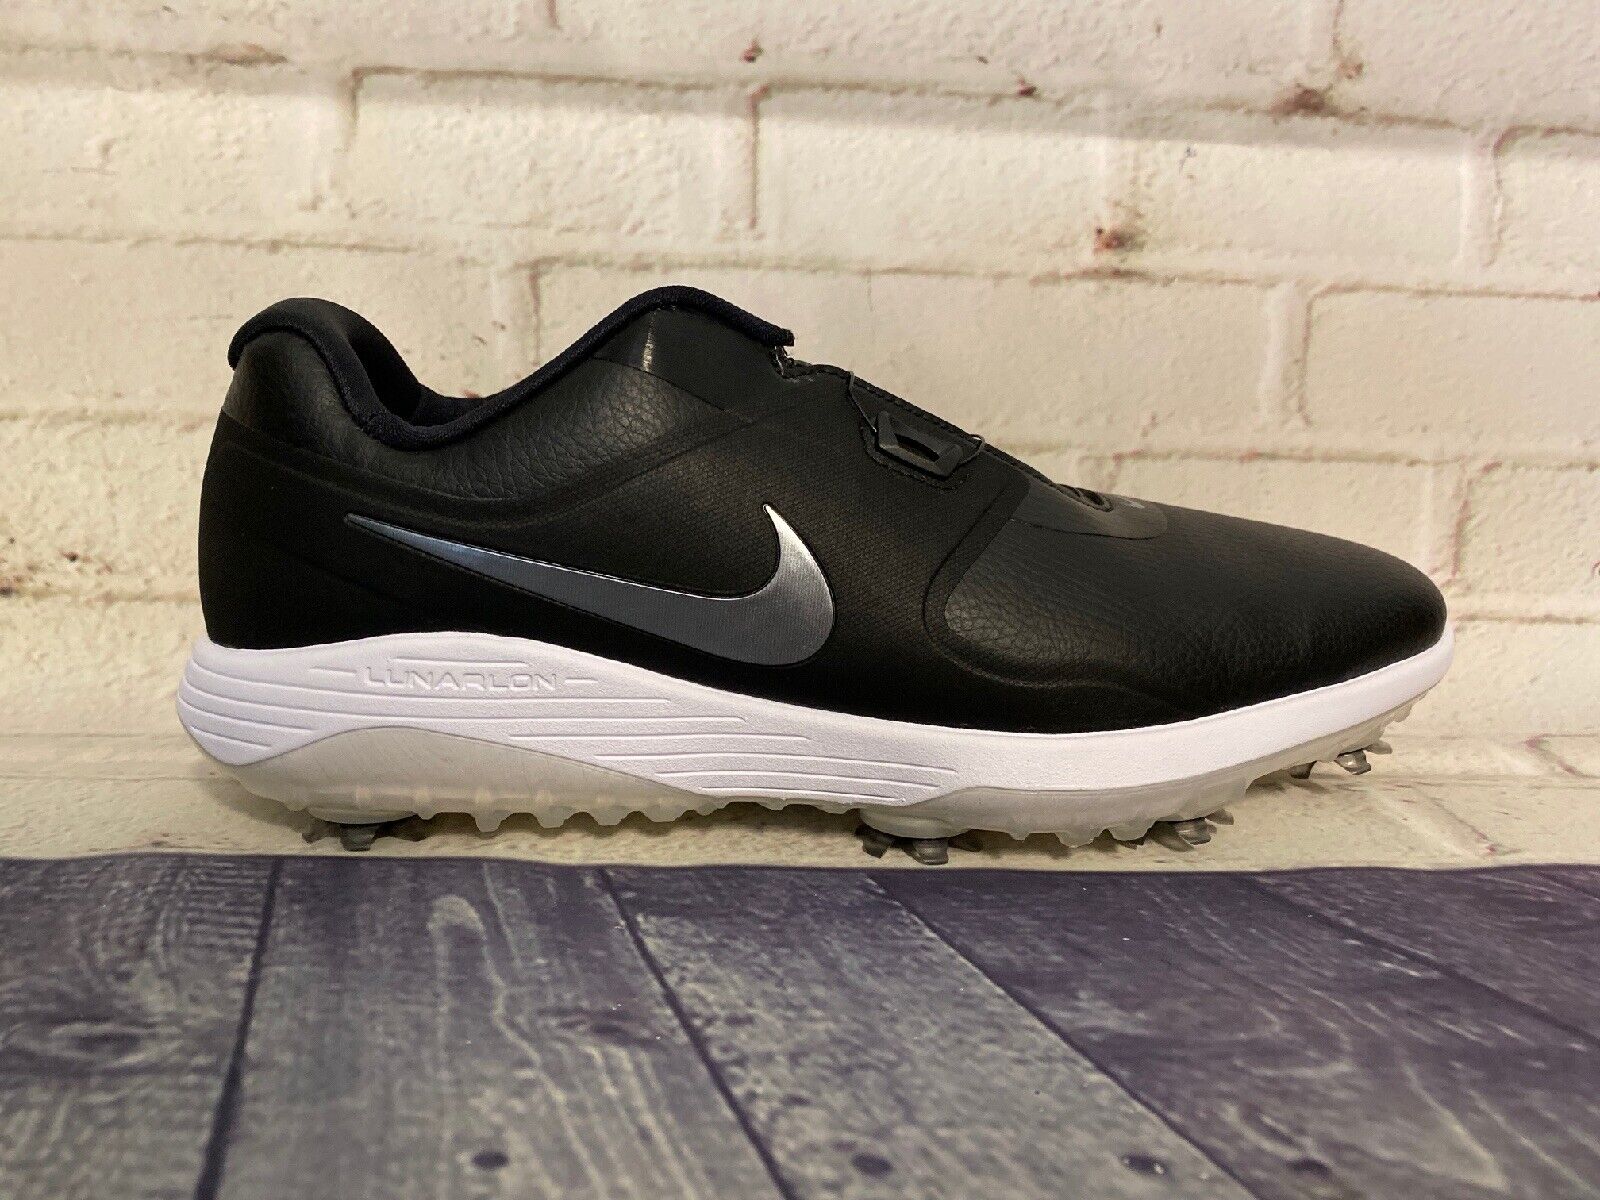 Nike BOA Golf Shoes Vapor Pro Mens AQ1790-001 Black Waterproof Hybrid Size 10.5